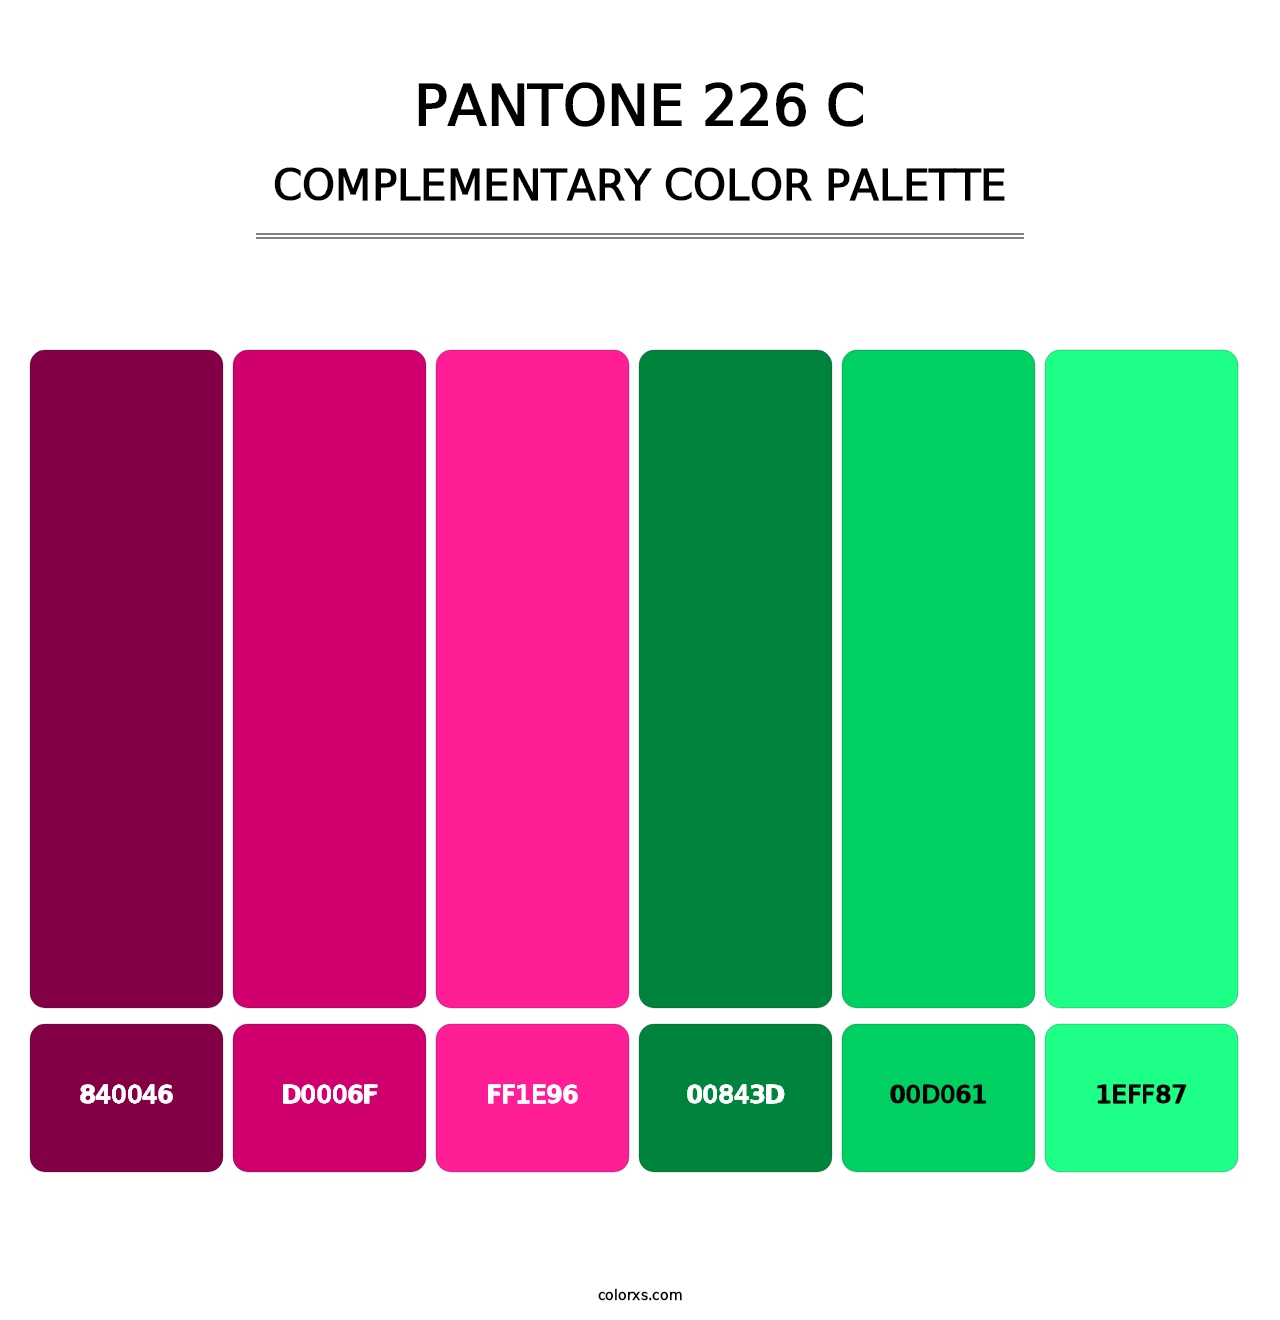 PANTONE 226 C - Complementary Color Palette